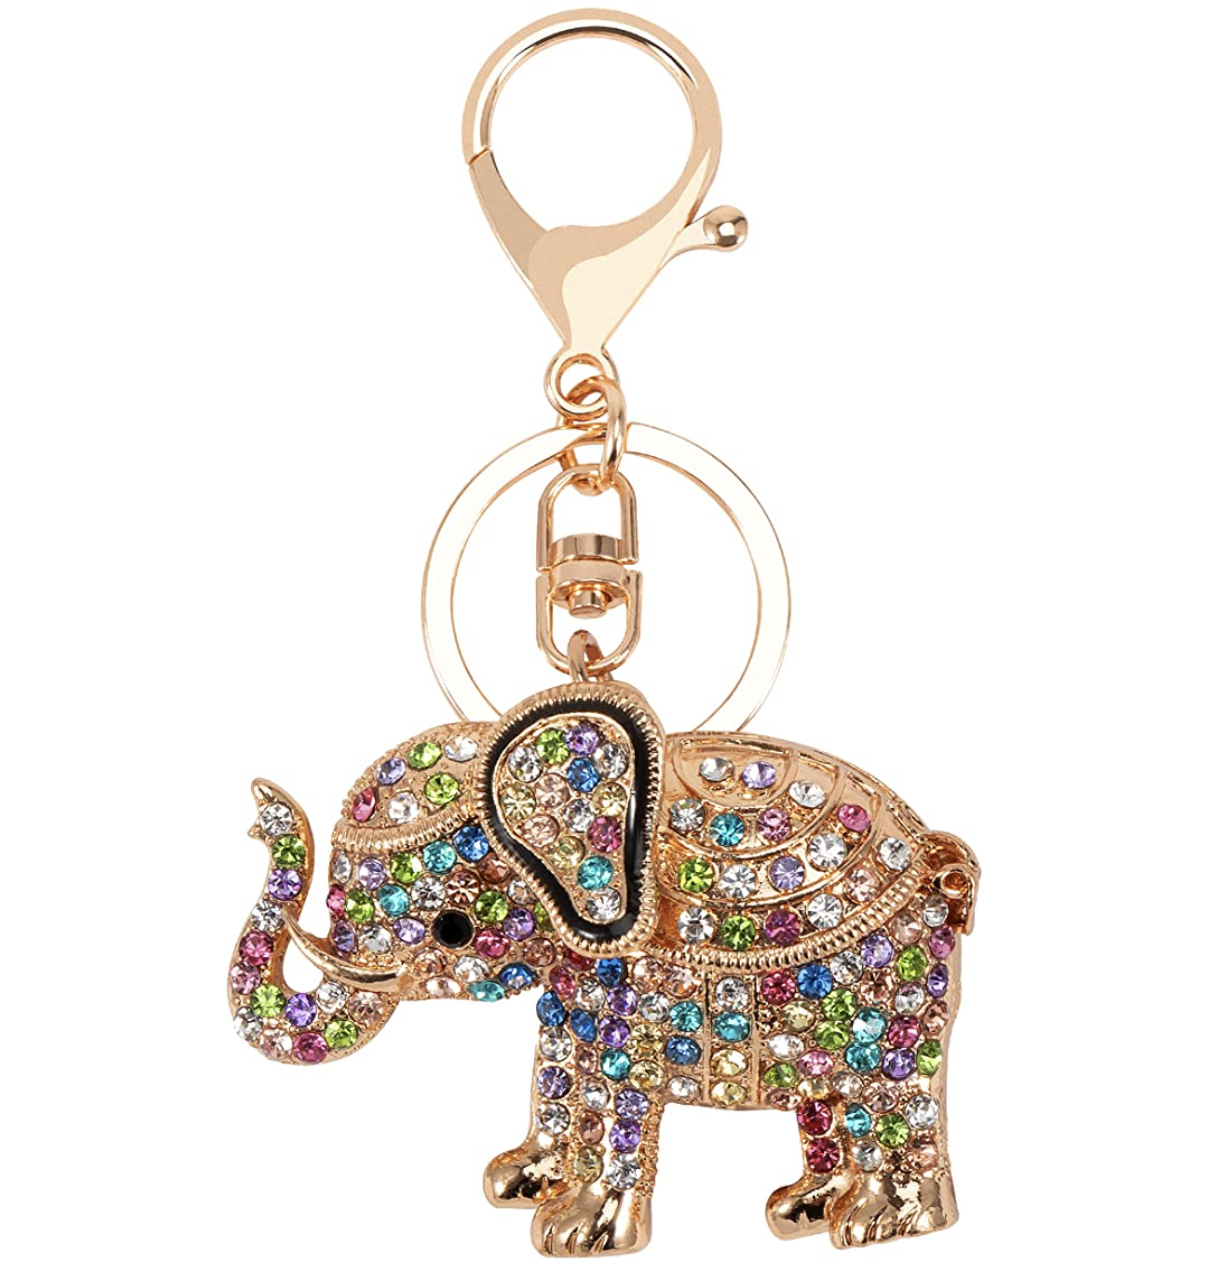 KEEP CALM AND LOVE ELEPHANTS Keyring Xmas Gift Idea 